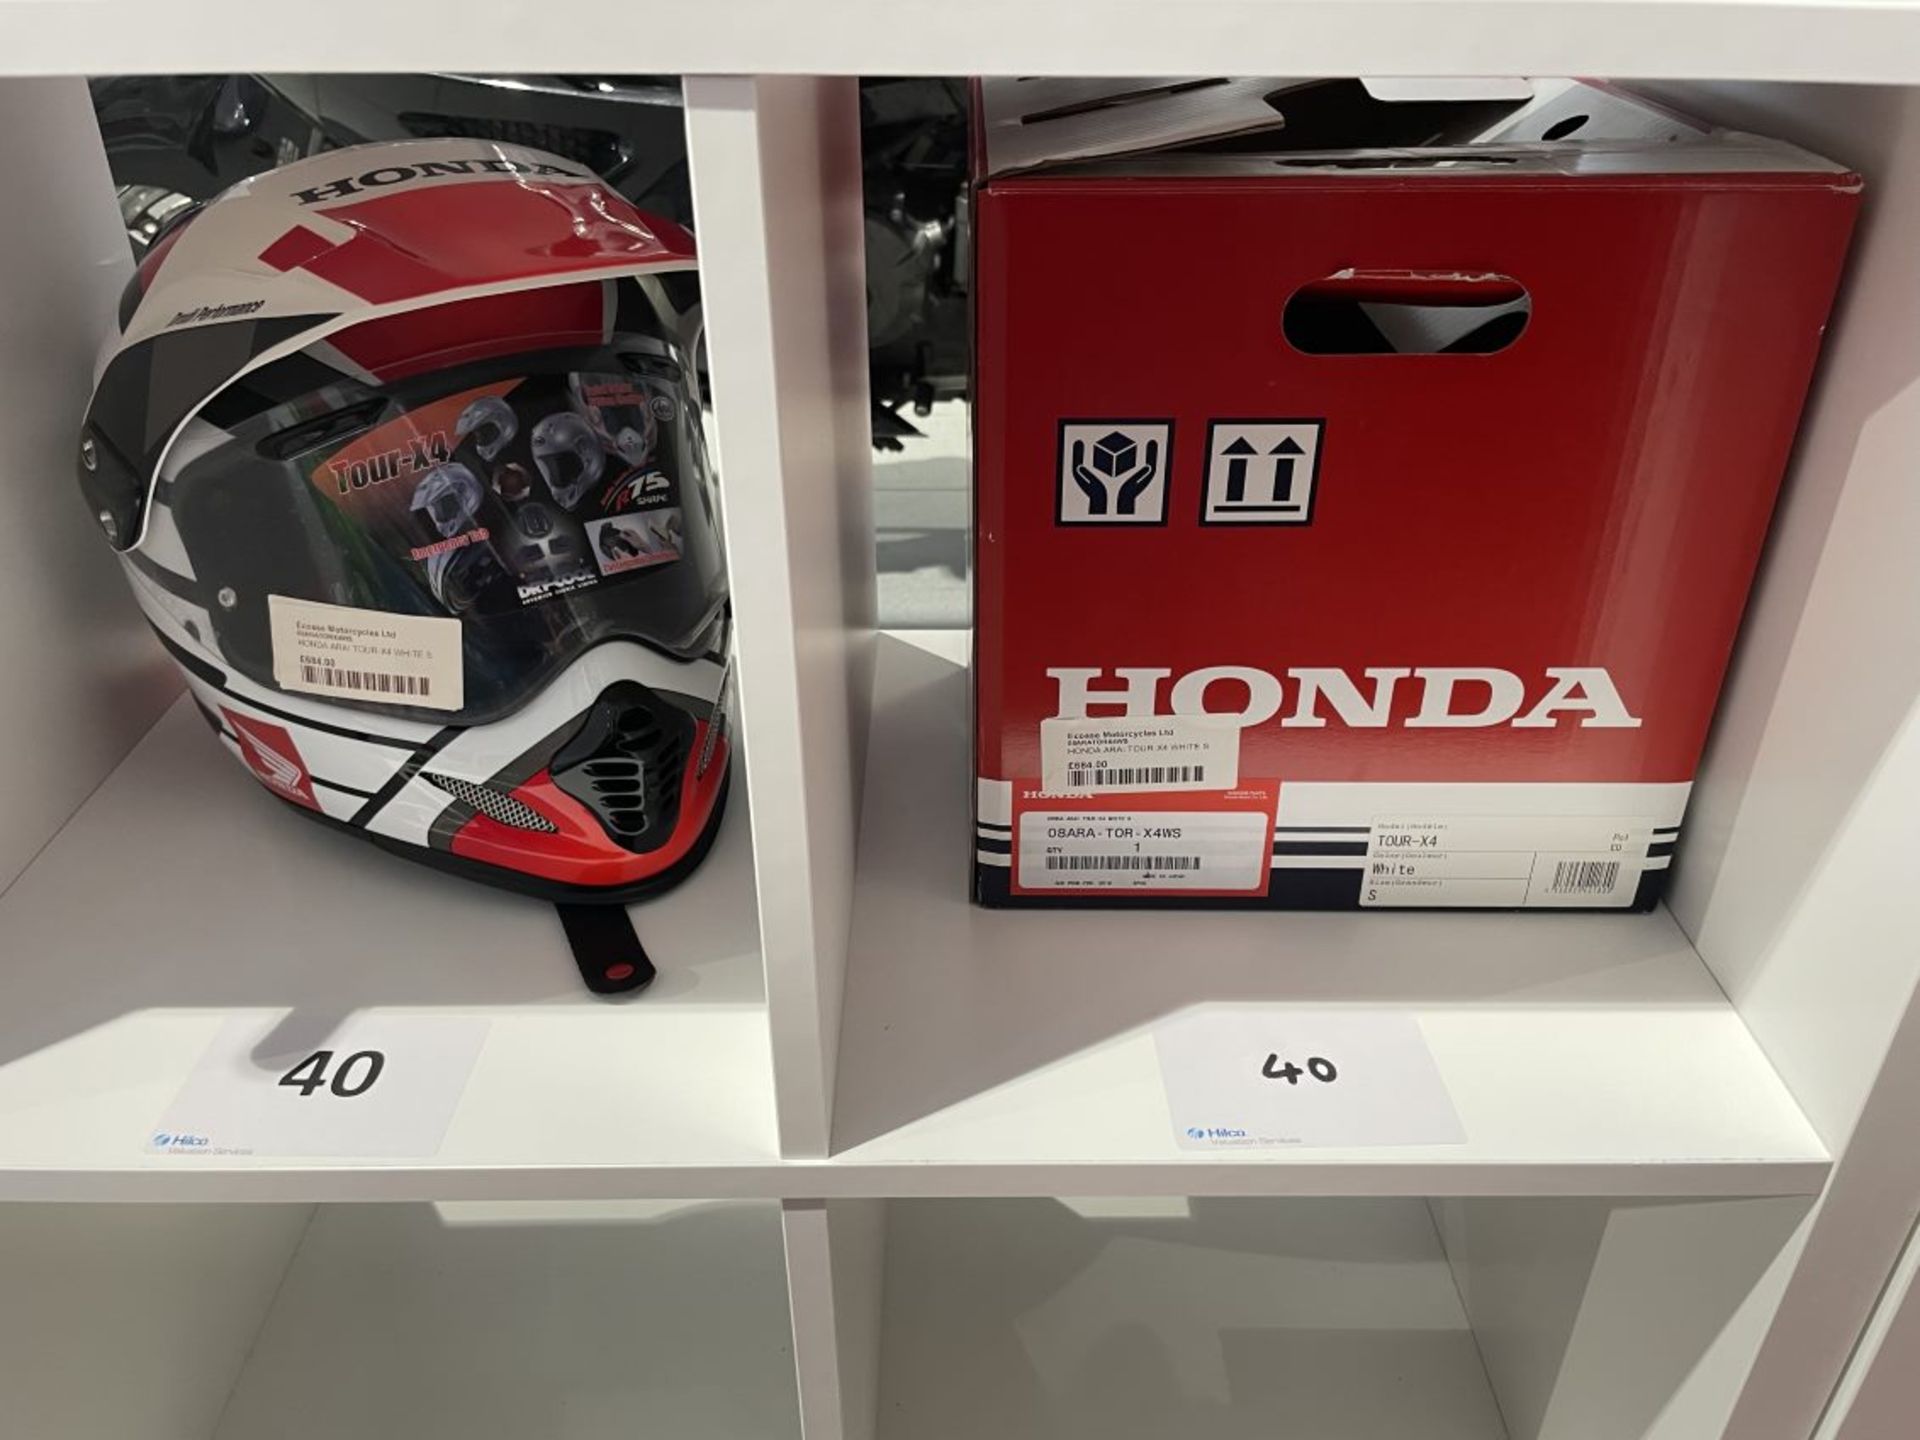 Arai Honda Branded Tour-X4 - Image 2 of 2